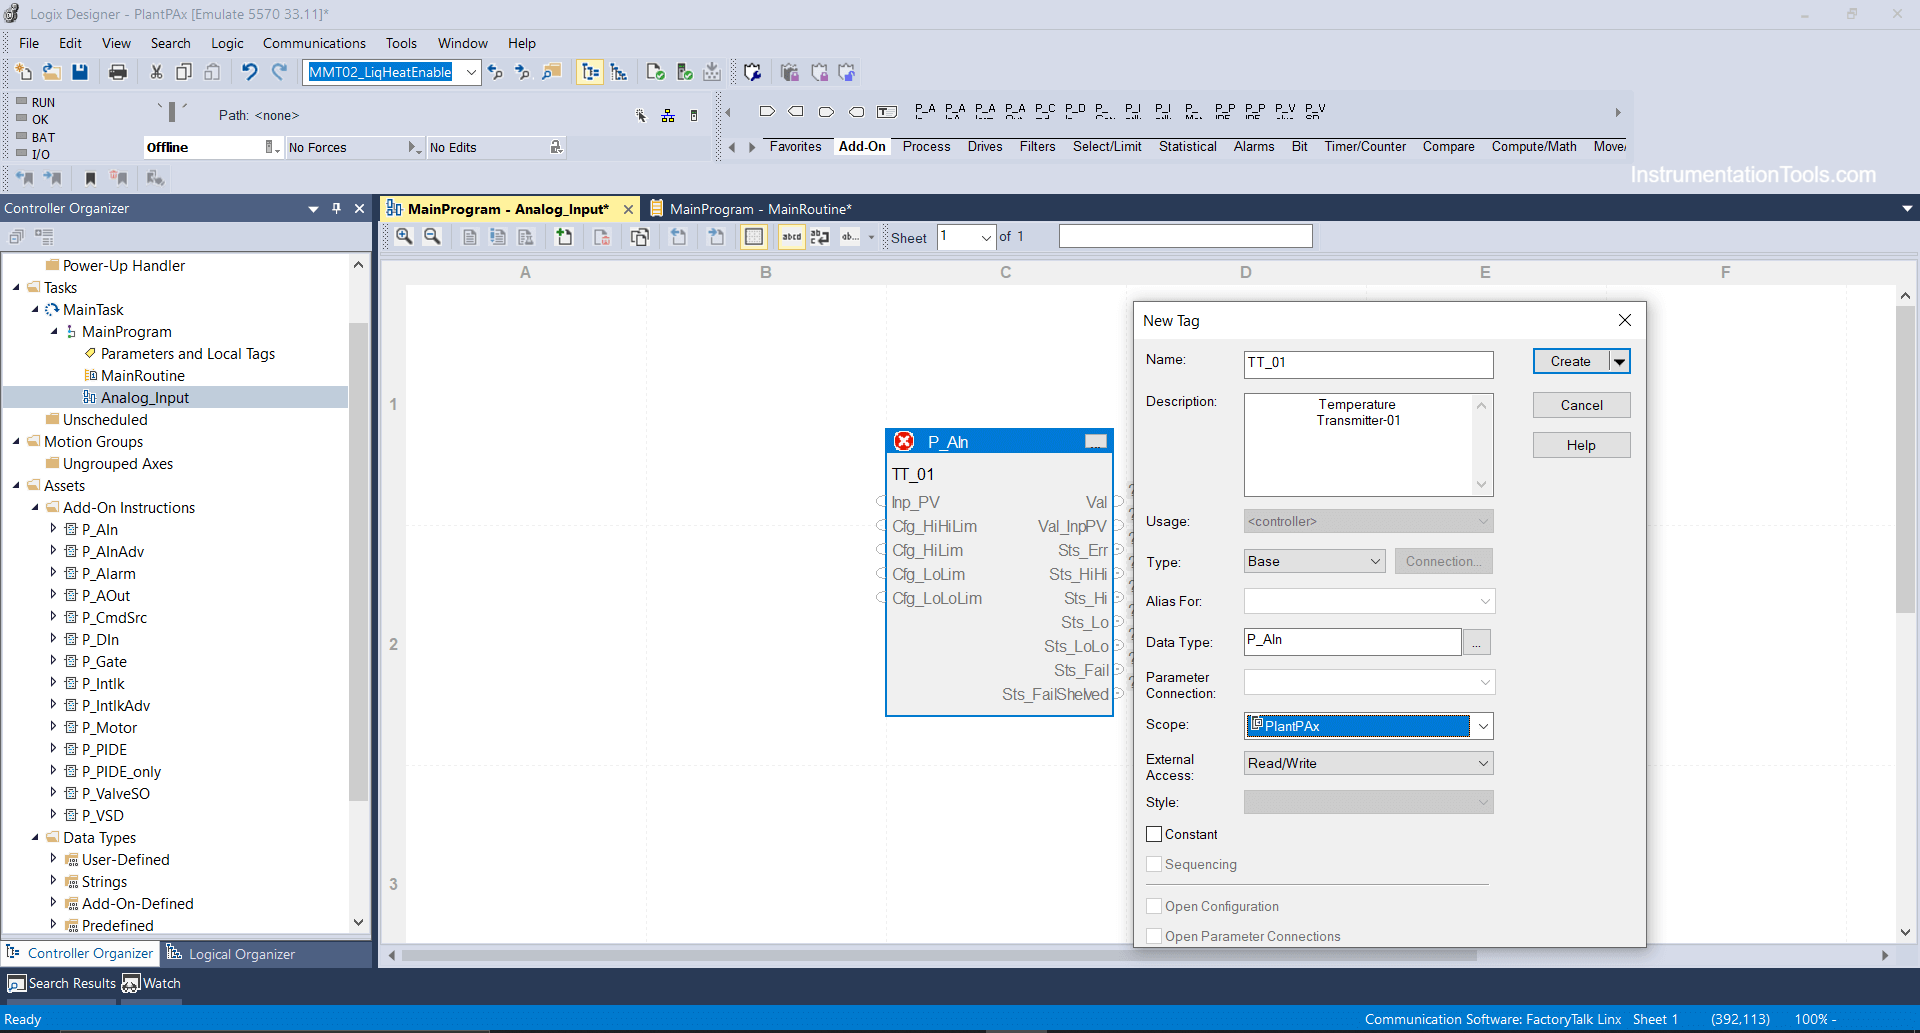 Add On Instructions in Studio 5000 Programming